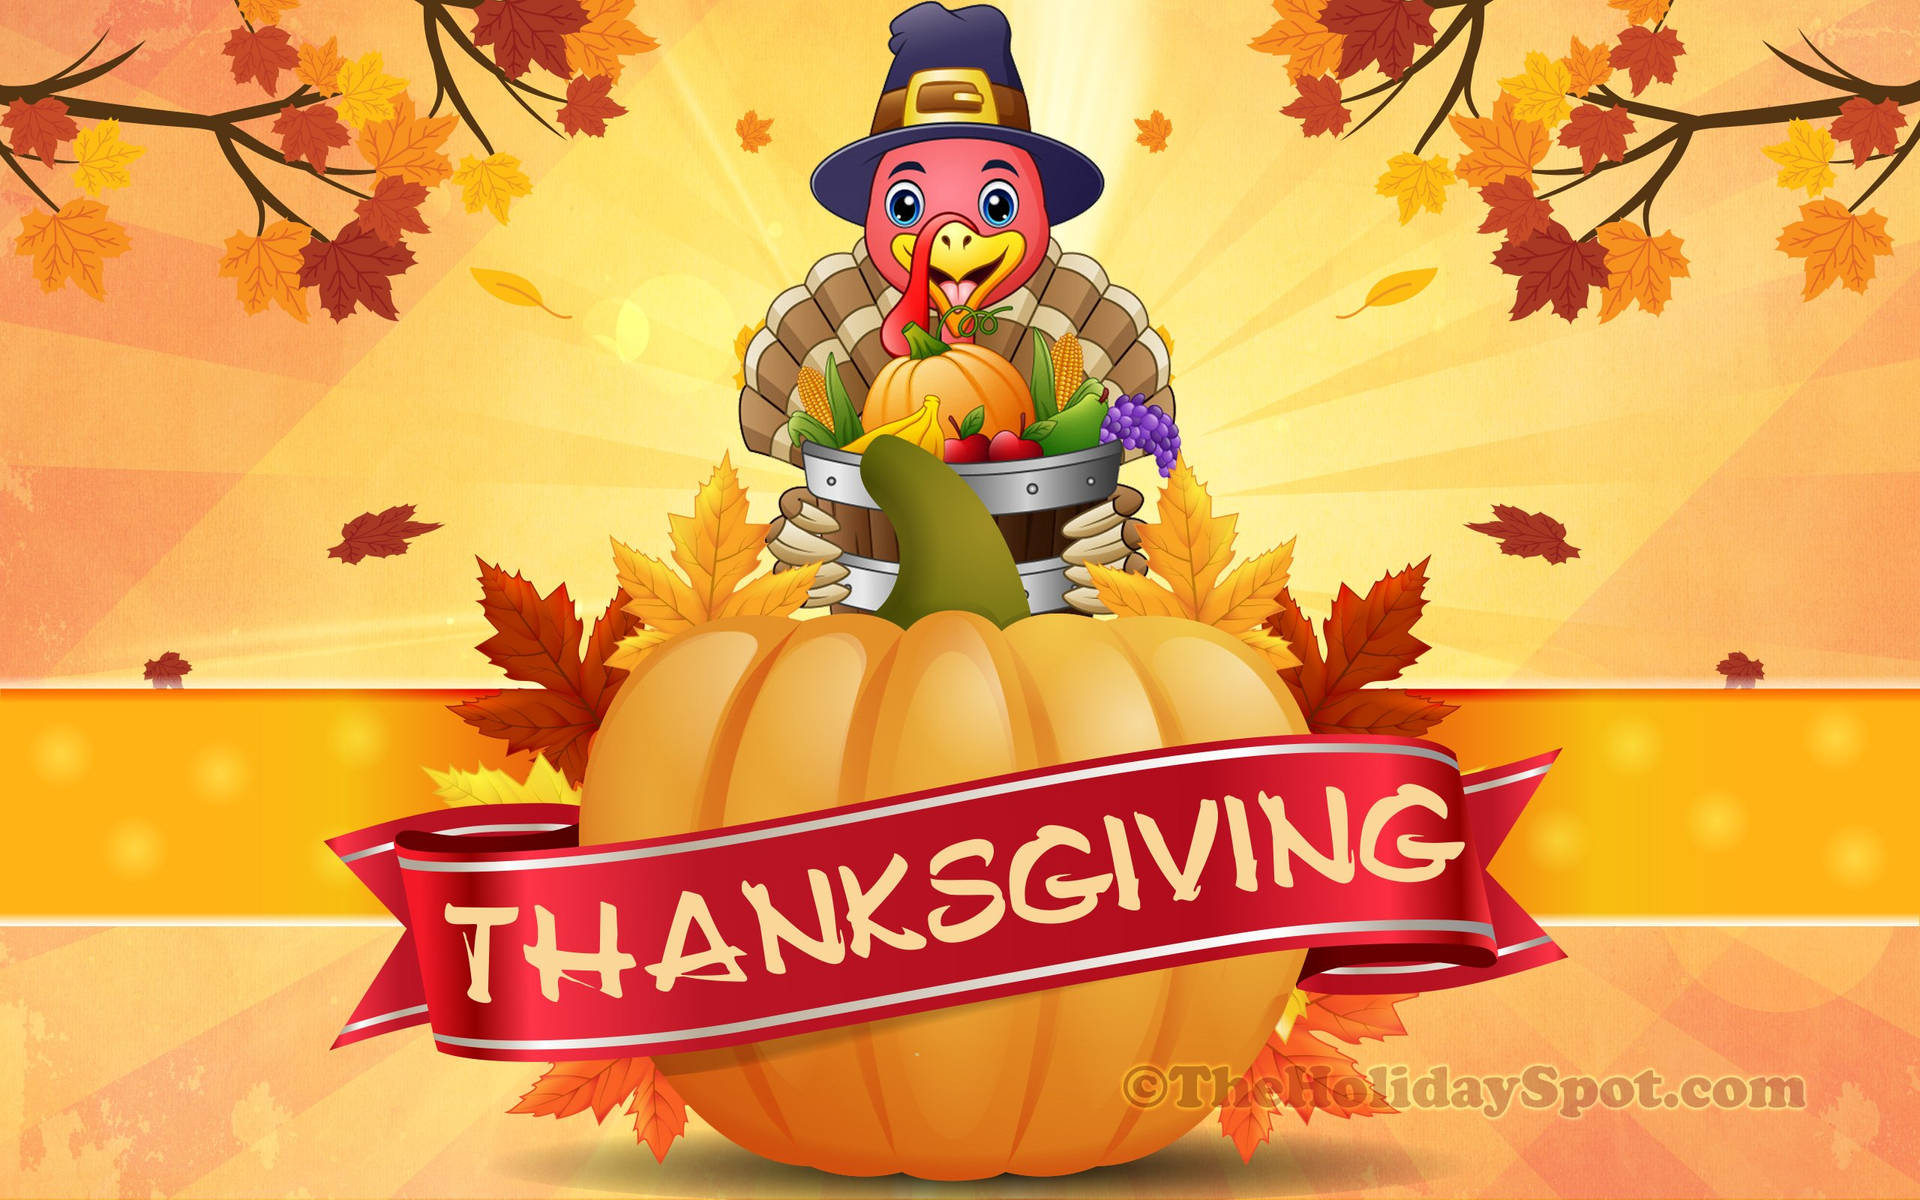 "Happy Thanksgiving from Turkey!" Wallpaper